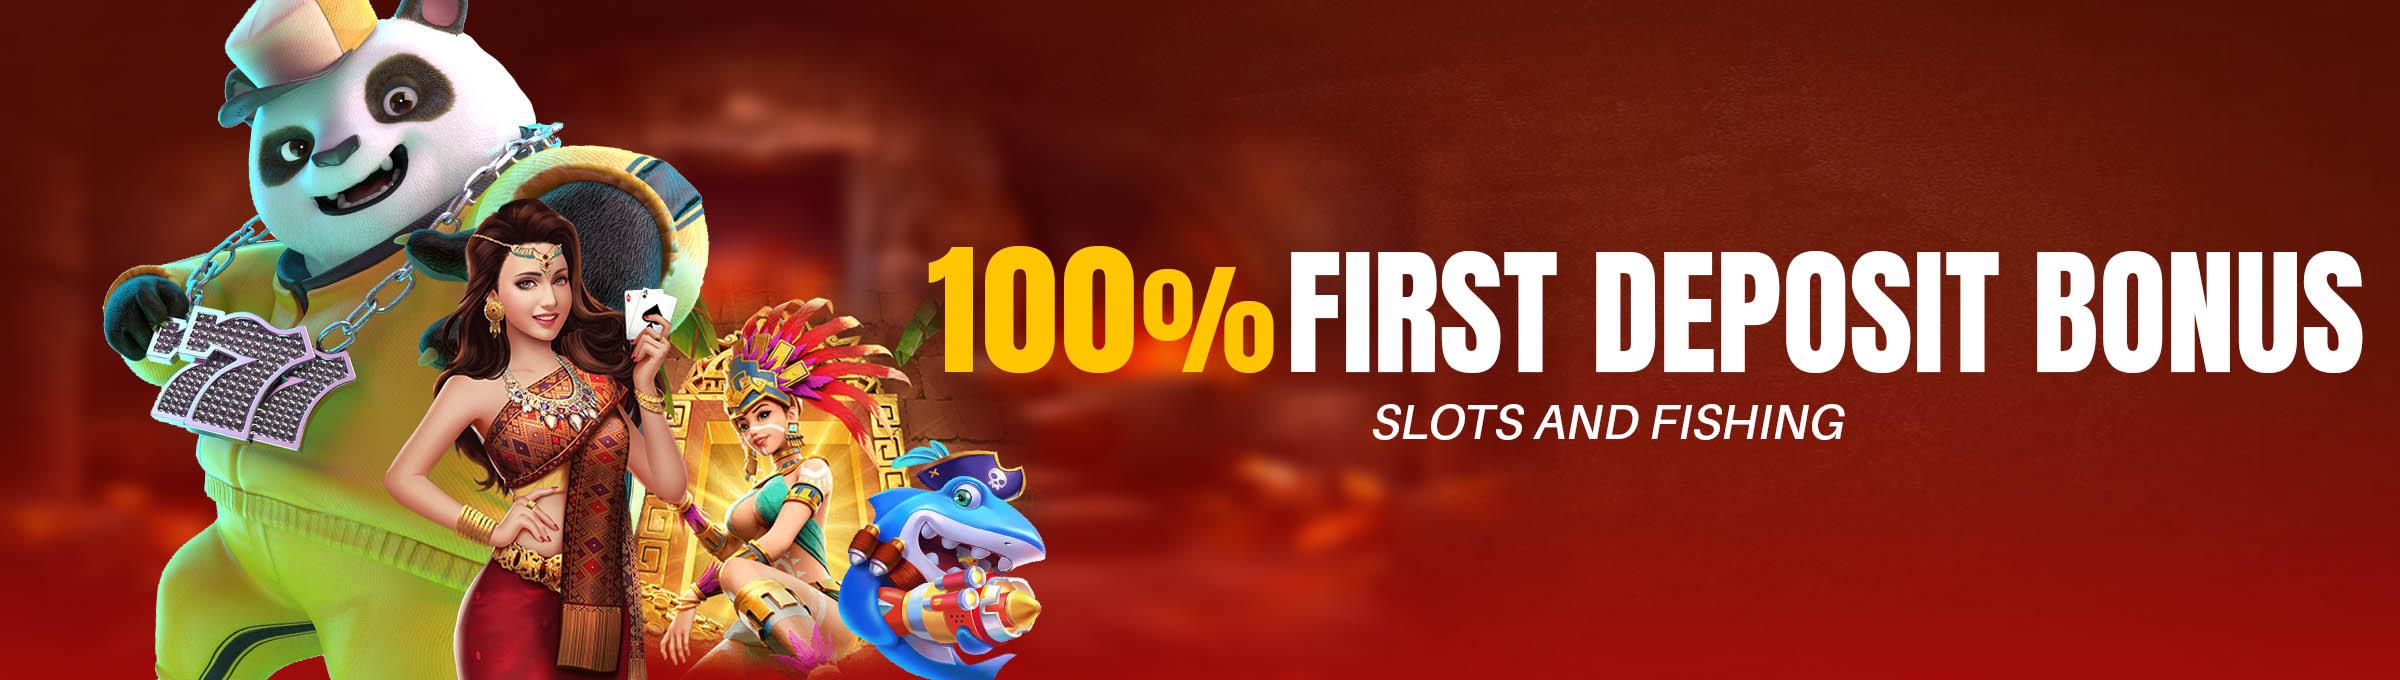 100% First Deposit Bonus on Slots and Fishing